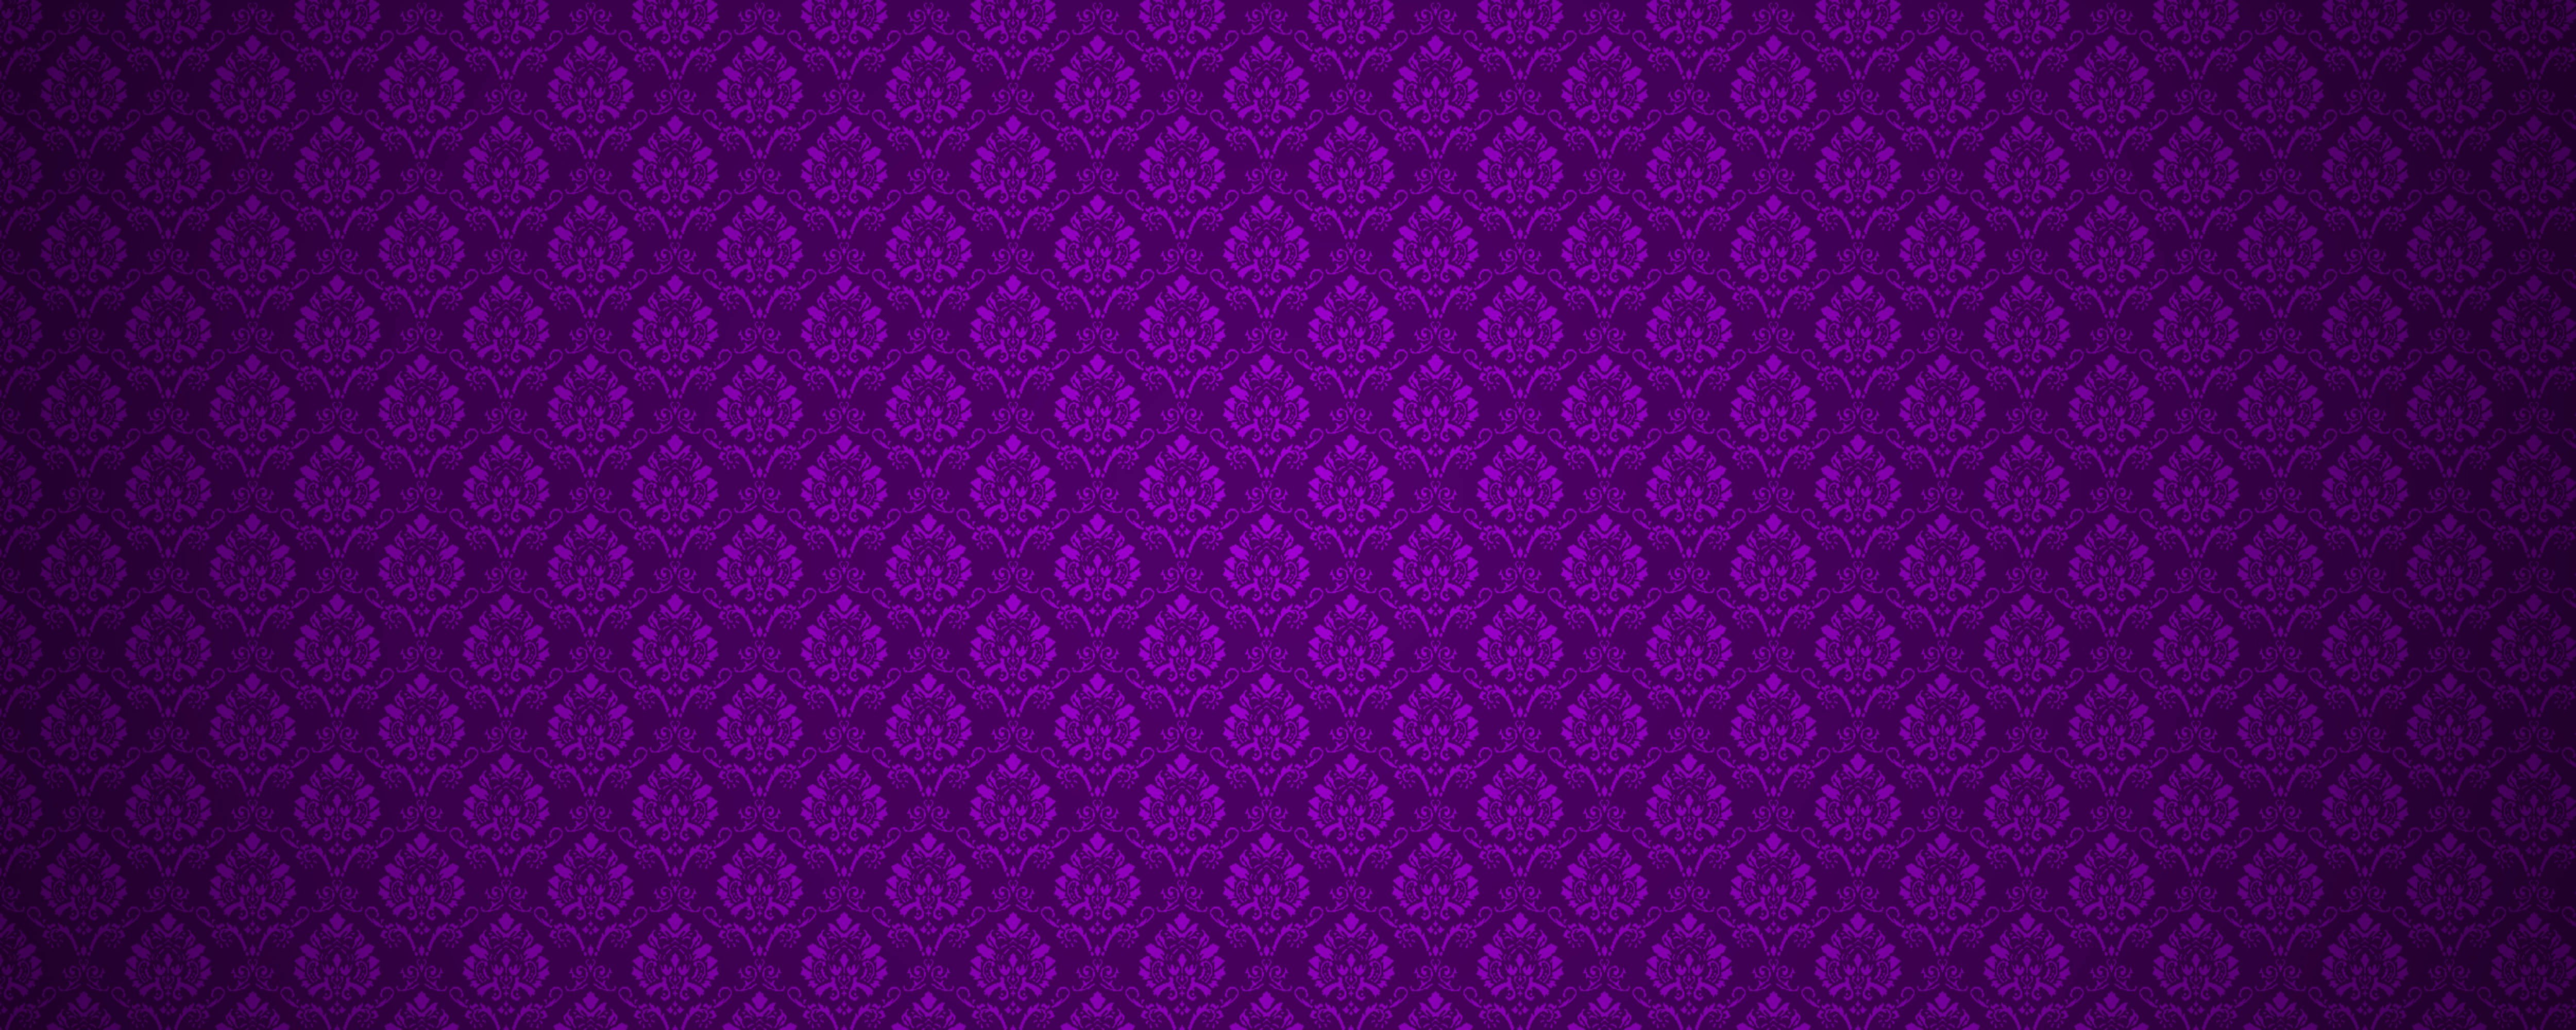 Cute Purple Backgrounds - WallpaperSafari